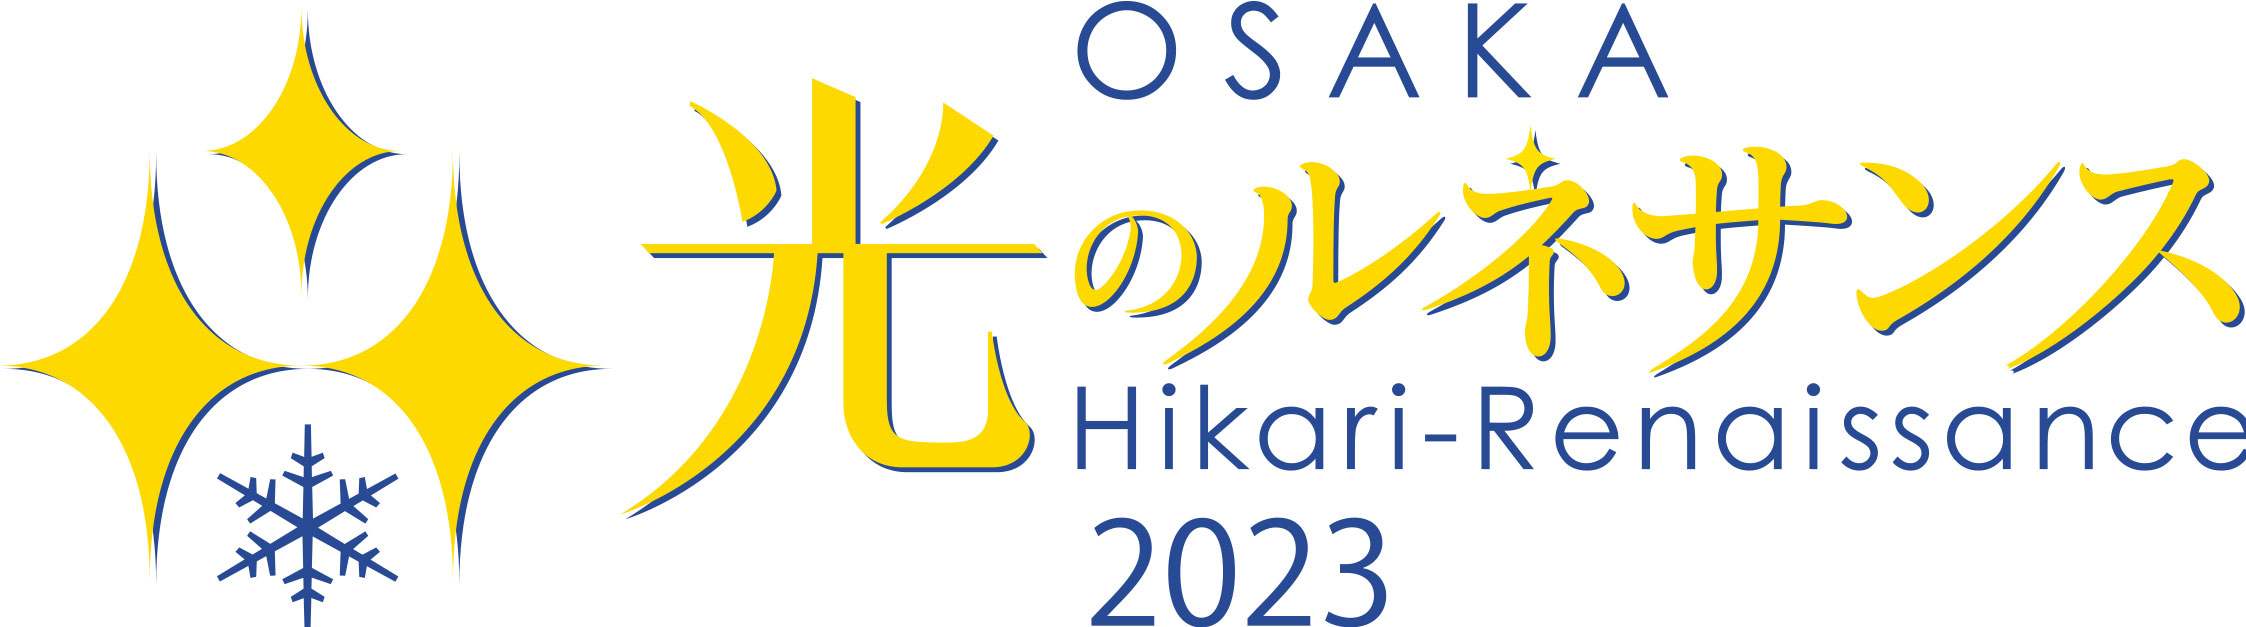 OSAKA光のルネサンス2021 ロゴ02